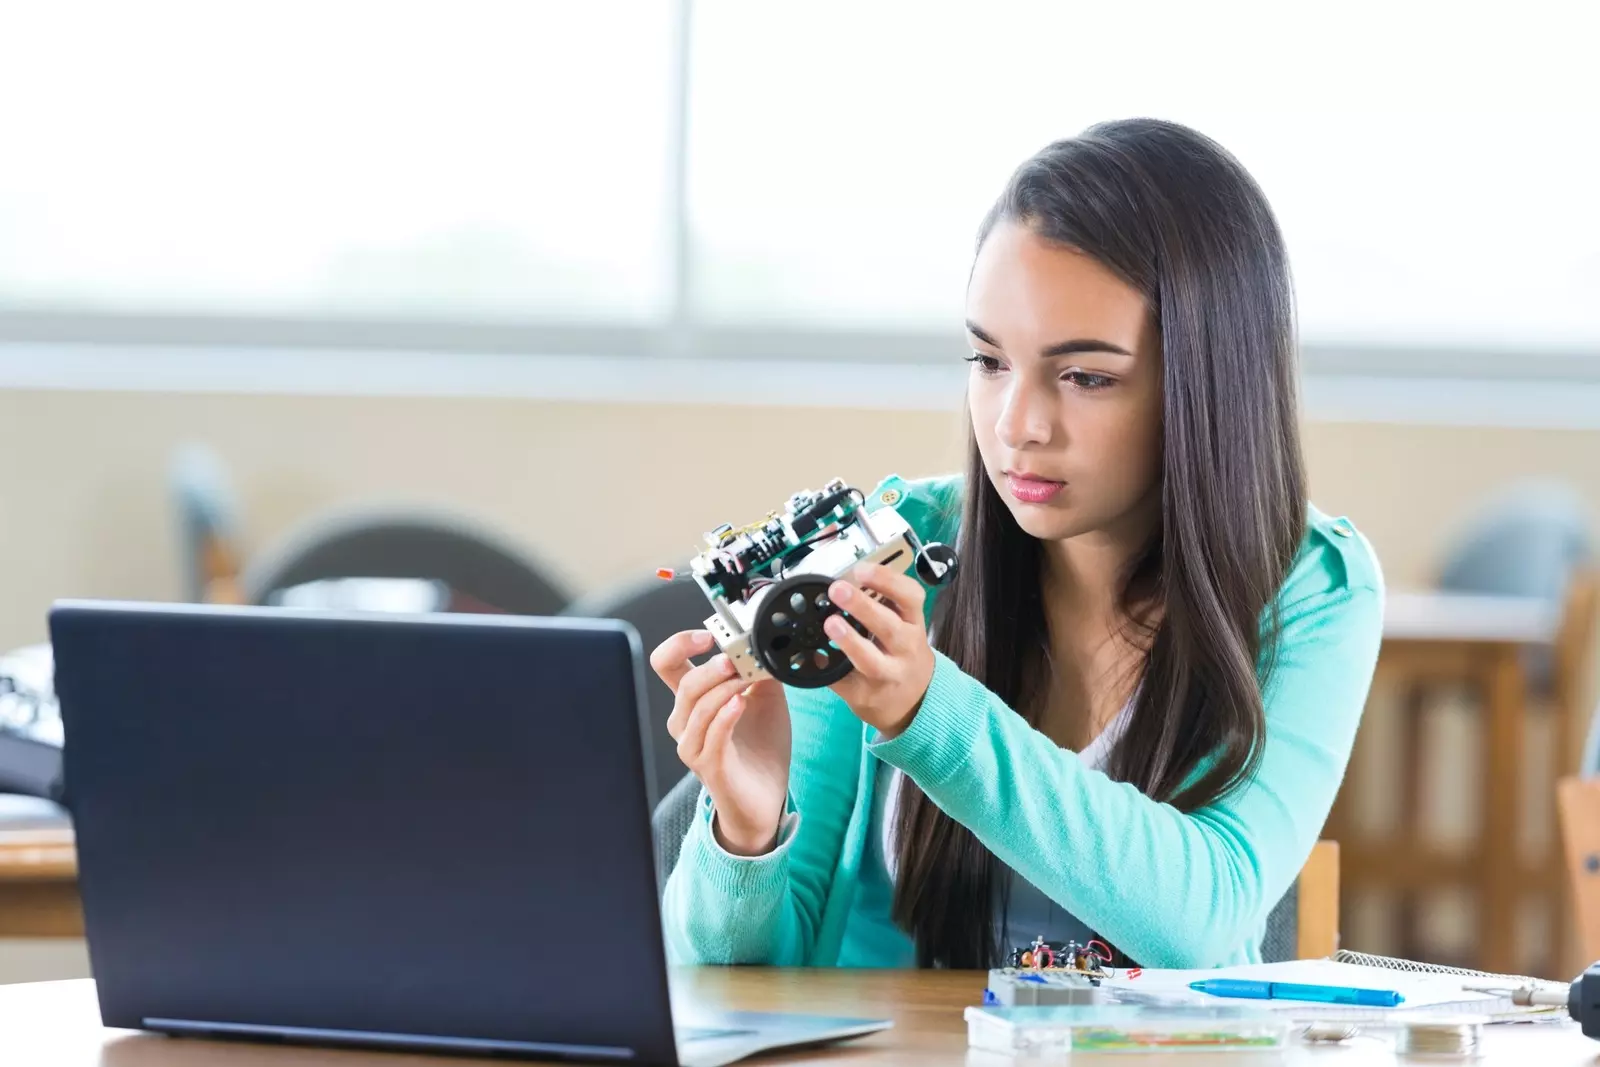 Young girl examining robotics toy